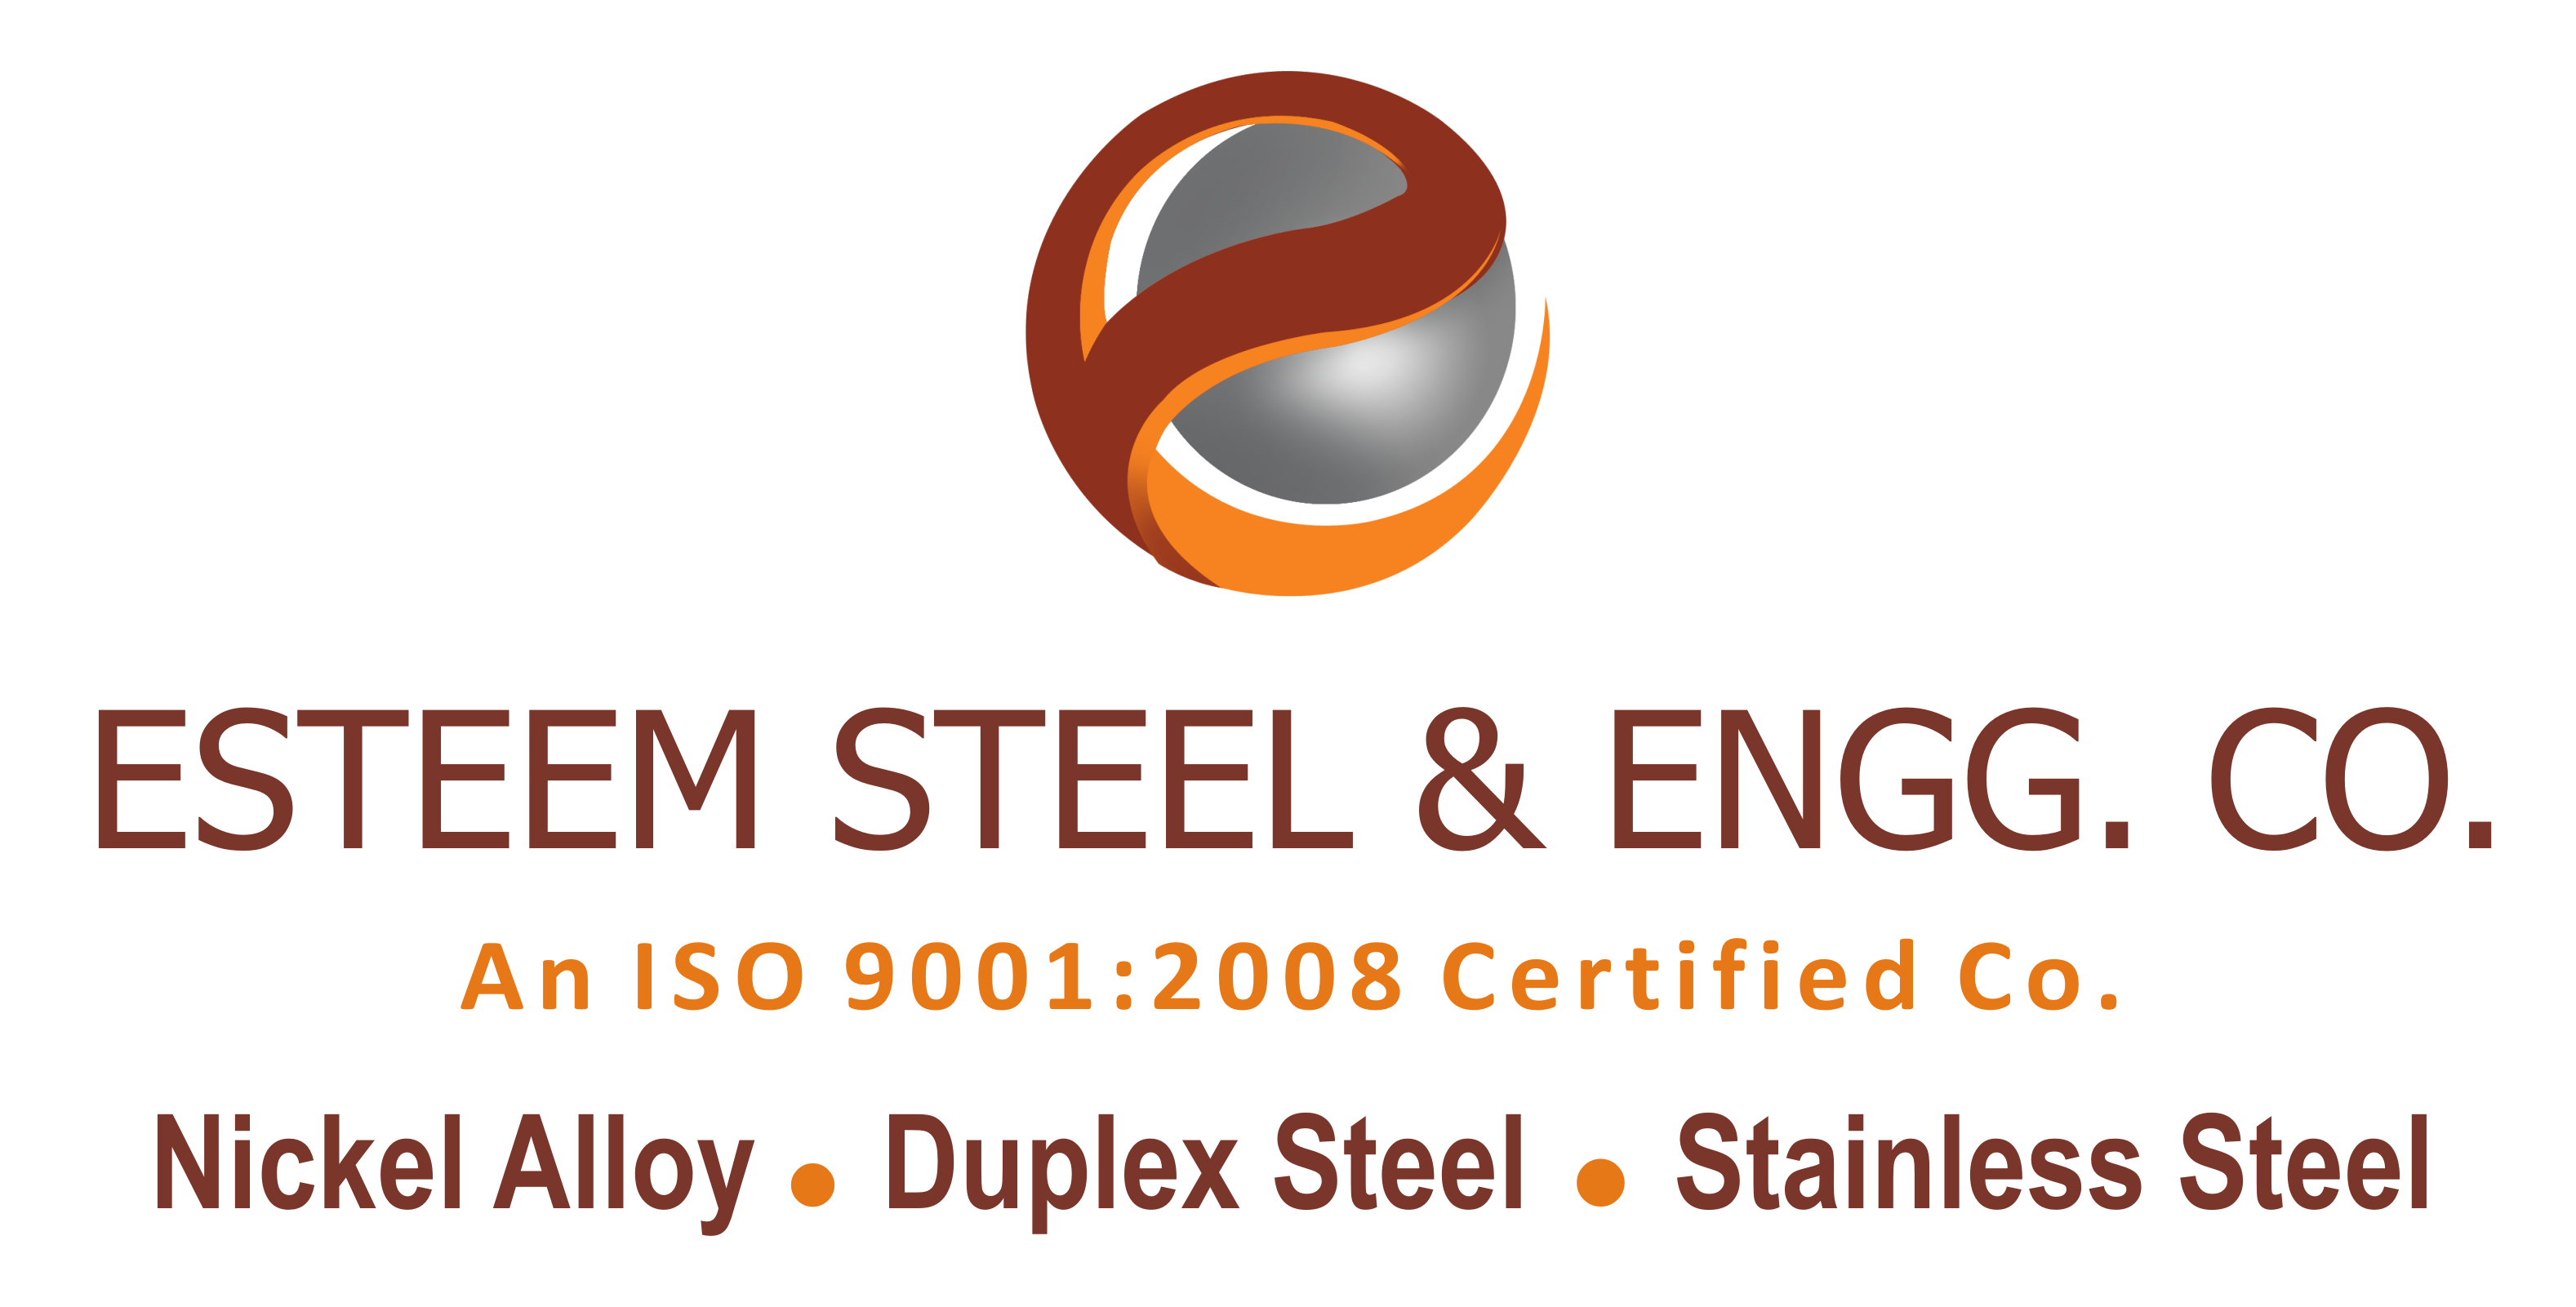 Esteem Steel & Engg.Co